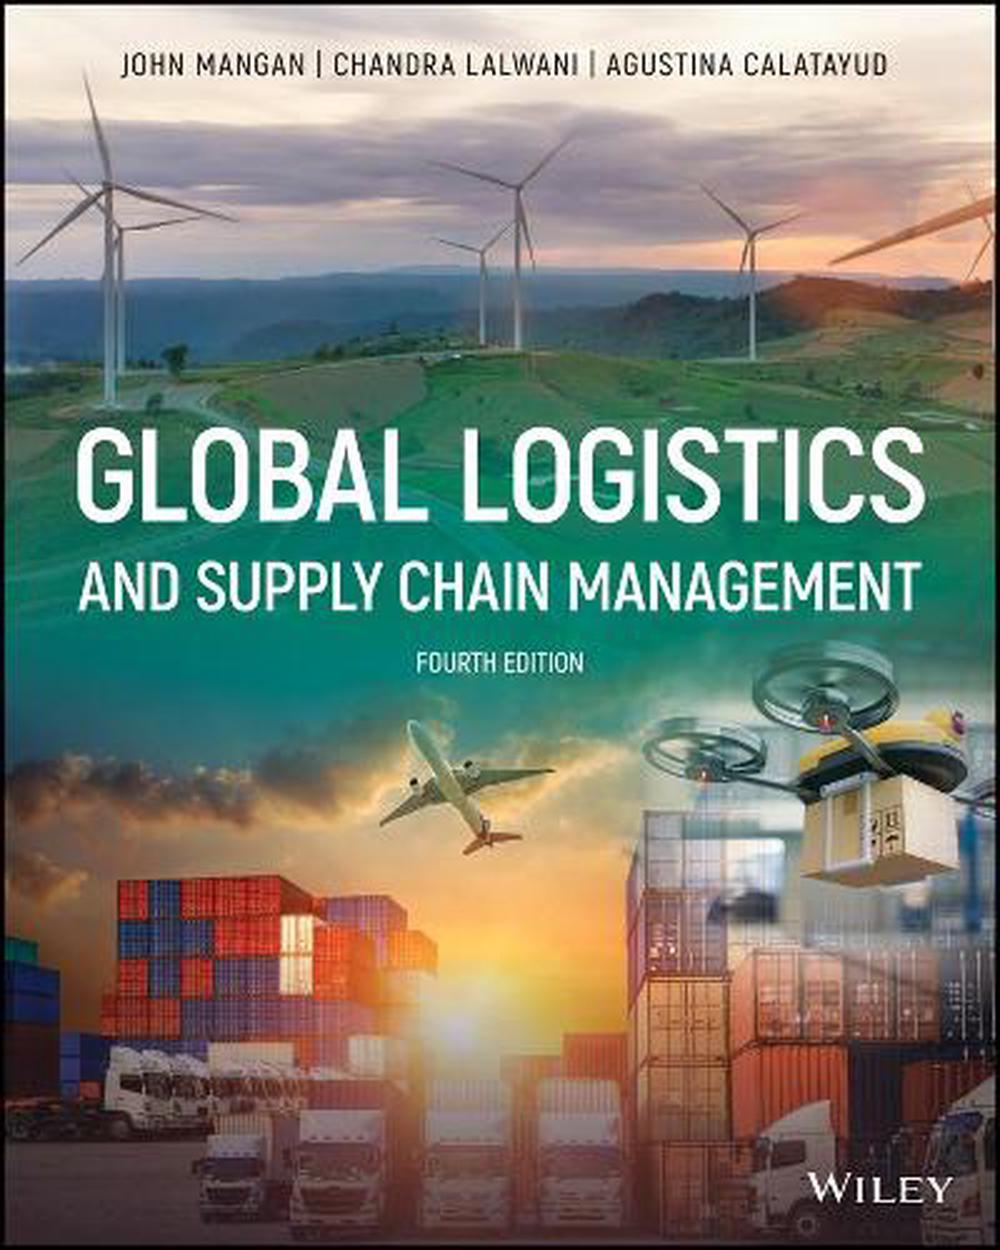 Global Logistics and Supply Chain Management by John Mangan (English) Paperback 9781119702993 eBay